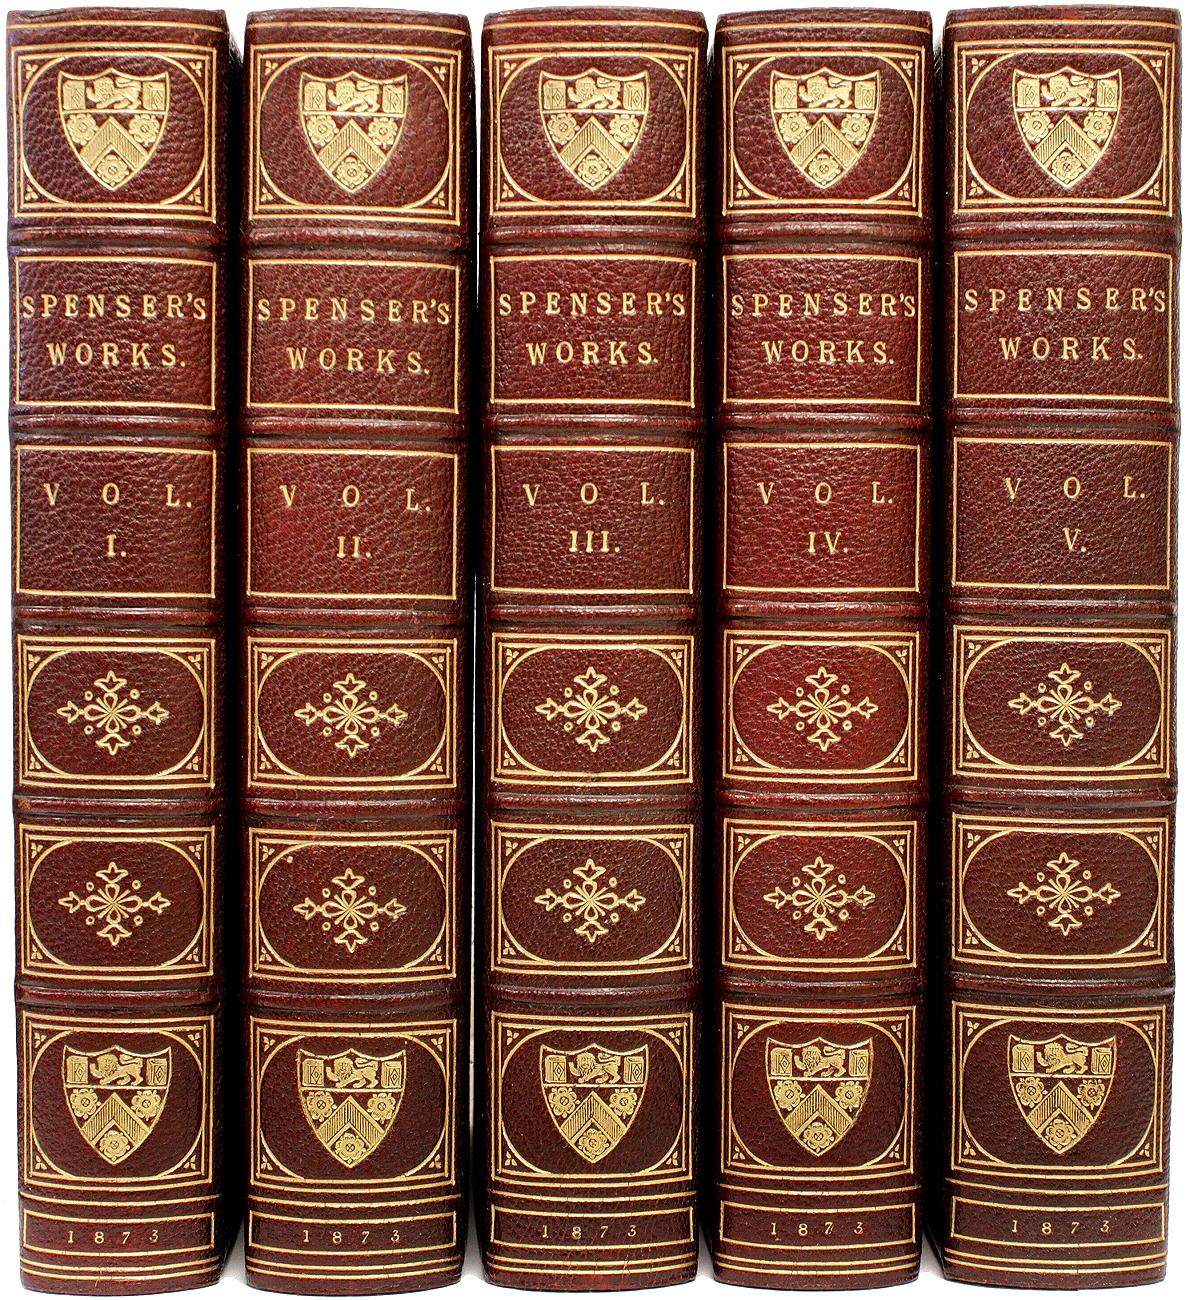 AUTHOR: SPENSER, Edmund (J. Payne Collier - editor). 

TITLE: The Works Of Edmund Spenser.

PUBLISHER: London: Bickers & Son, 1873.

DESCRIPTION: 5 vols., 9